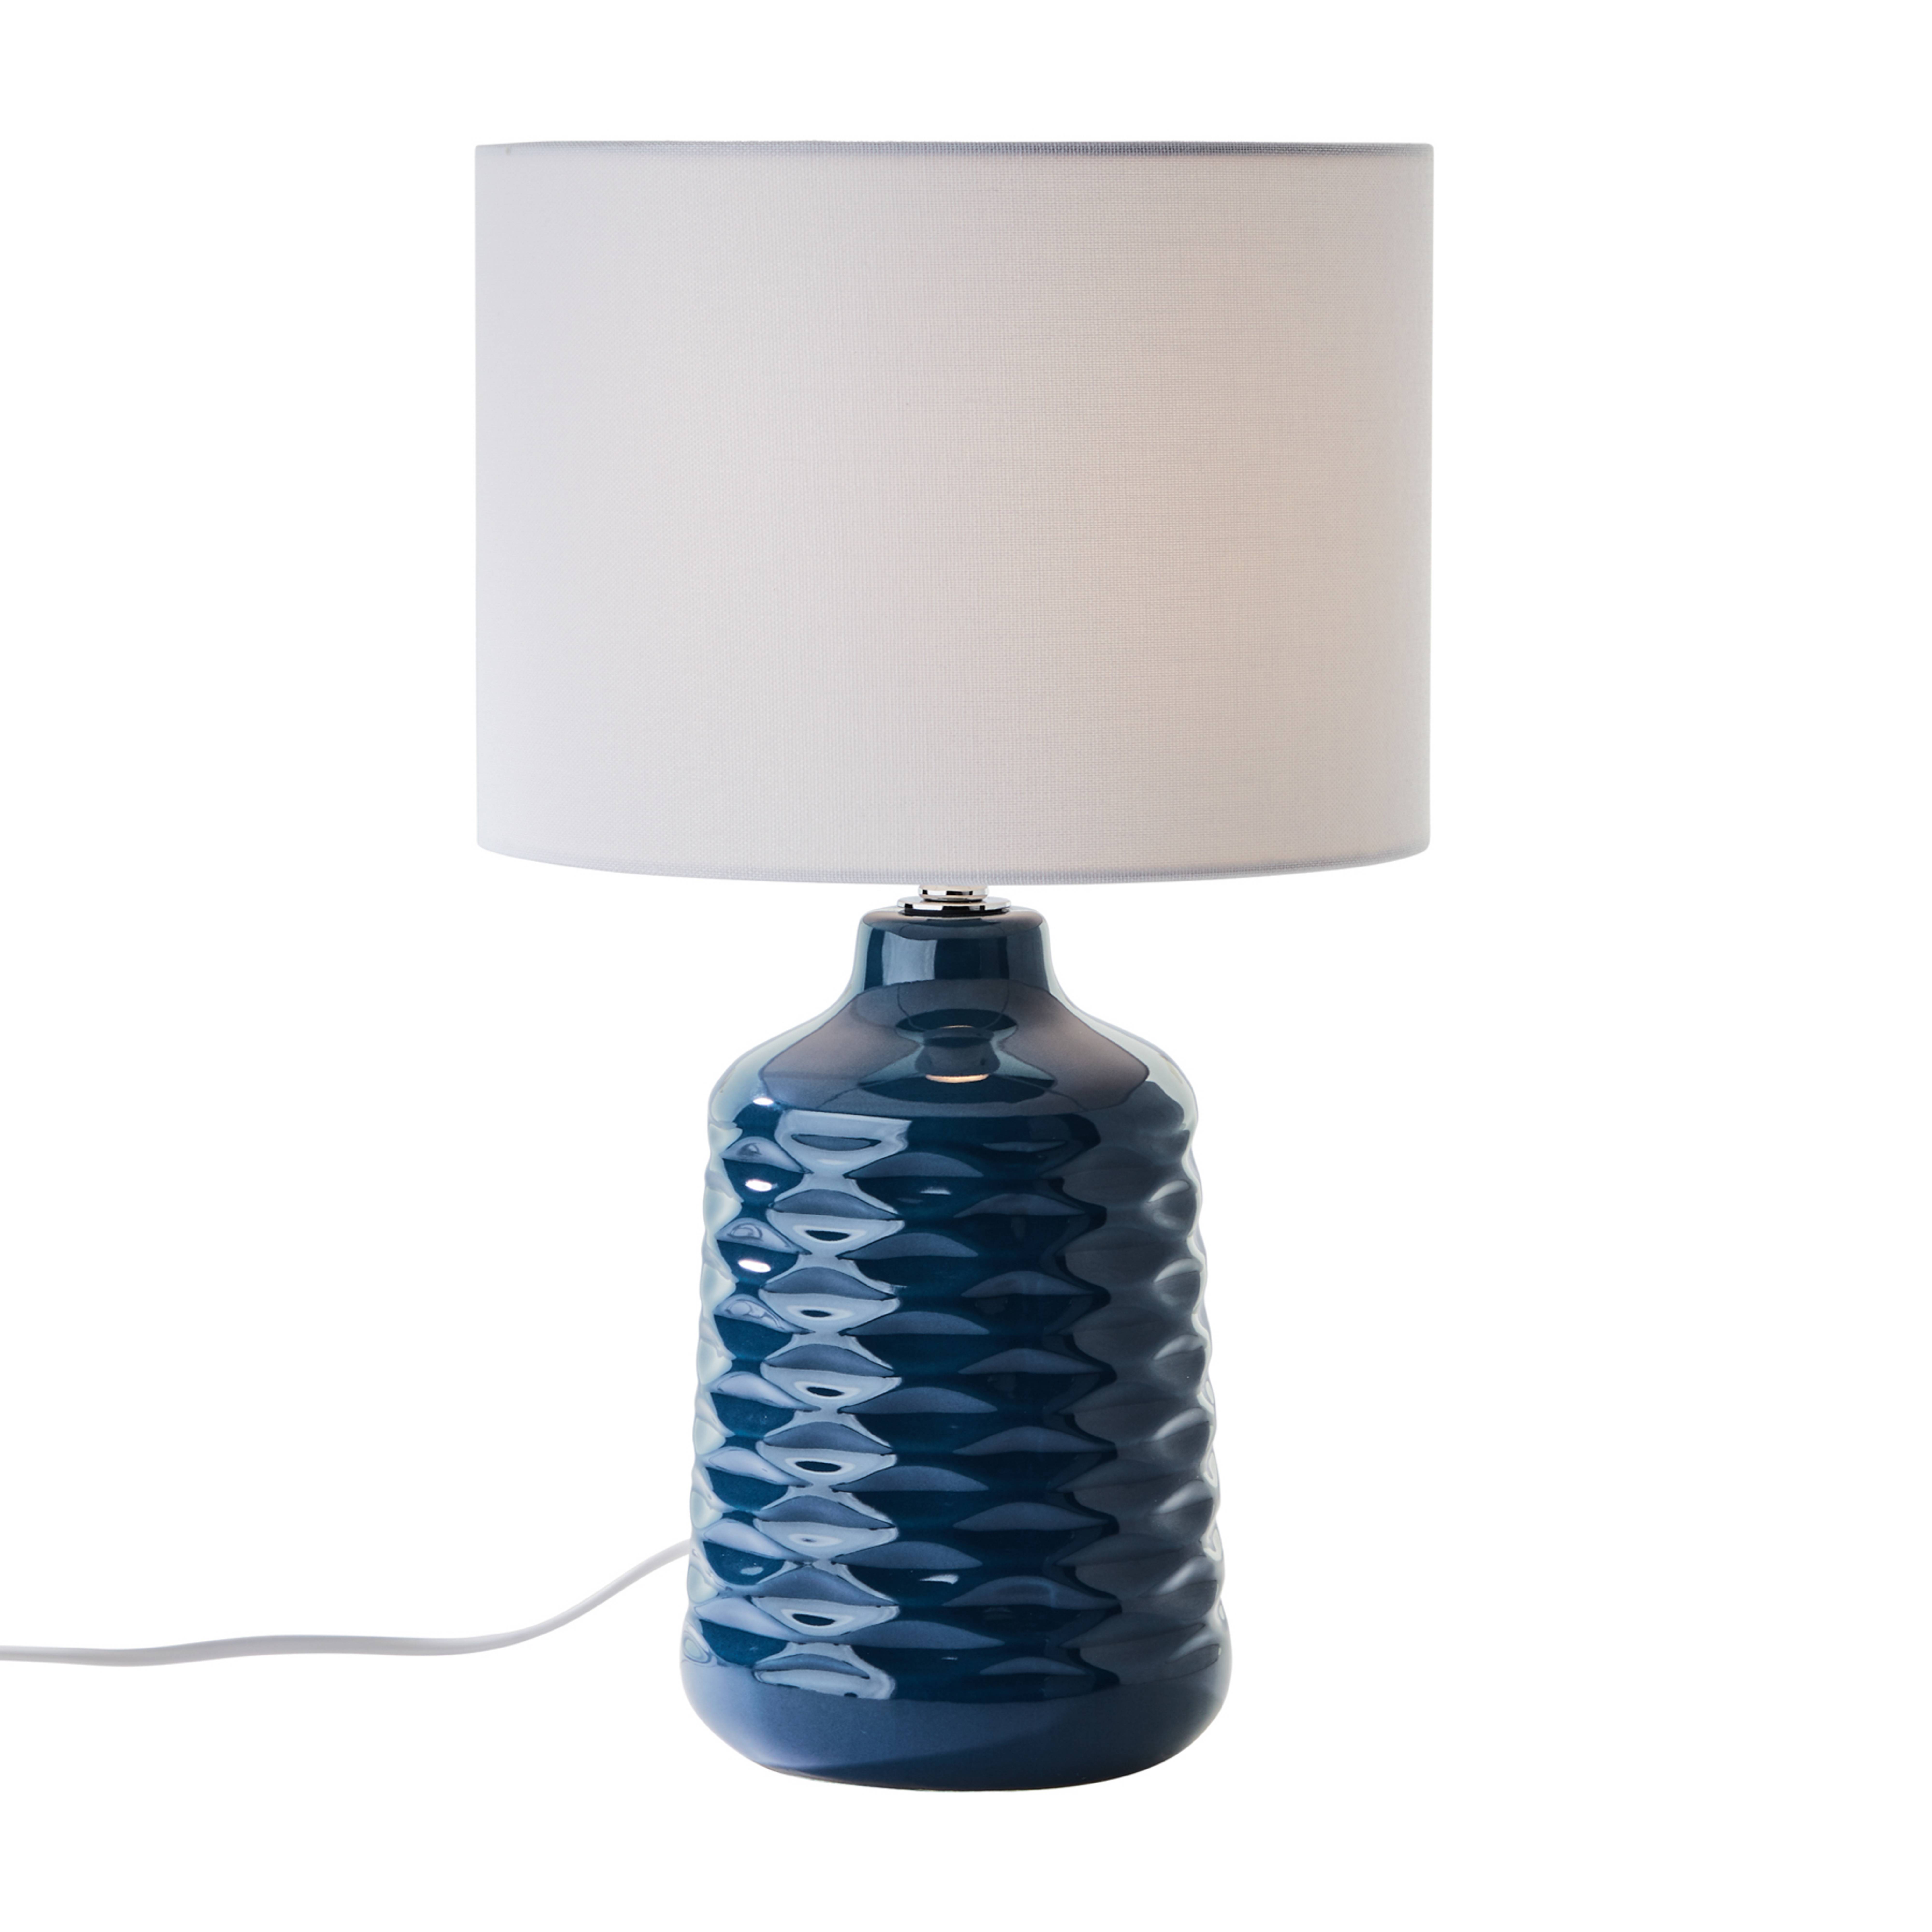 Ilysa table lamp, white fabric, blue ceramic base